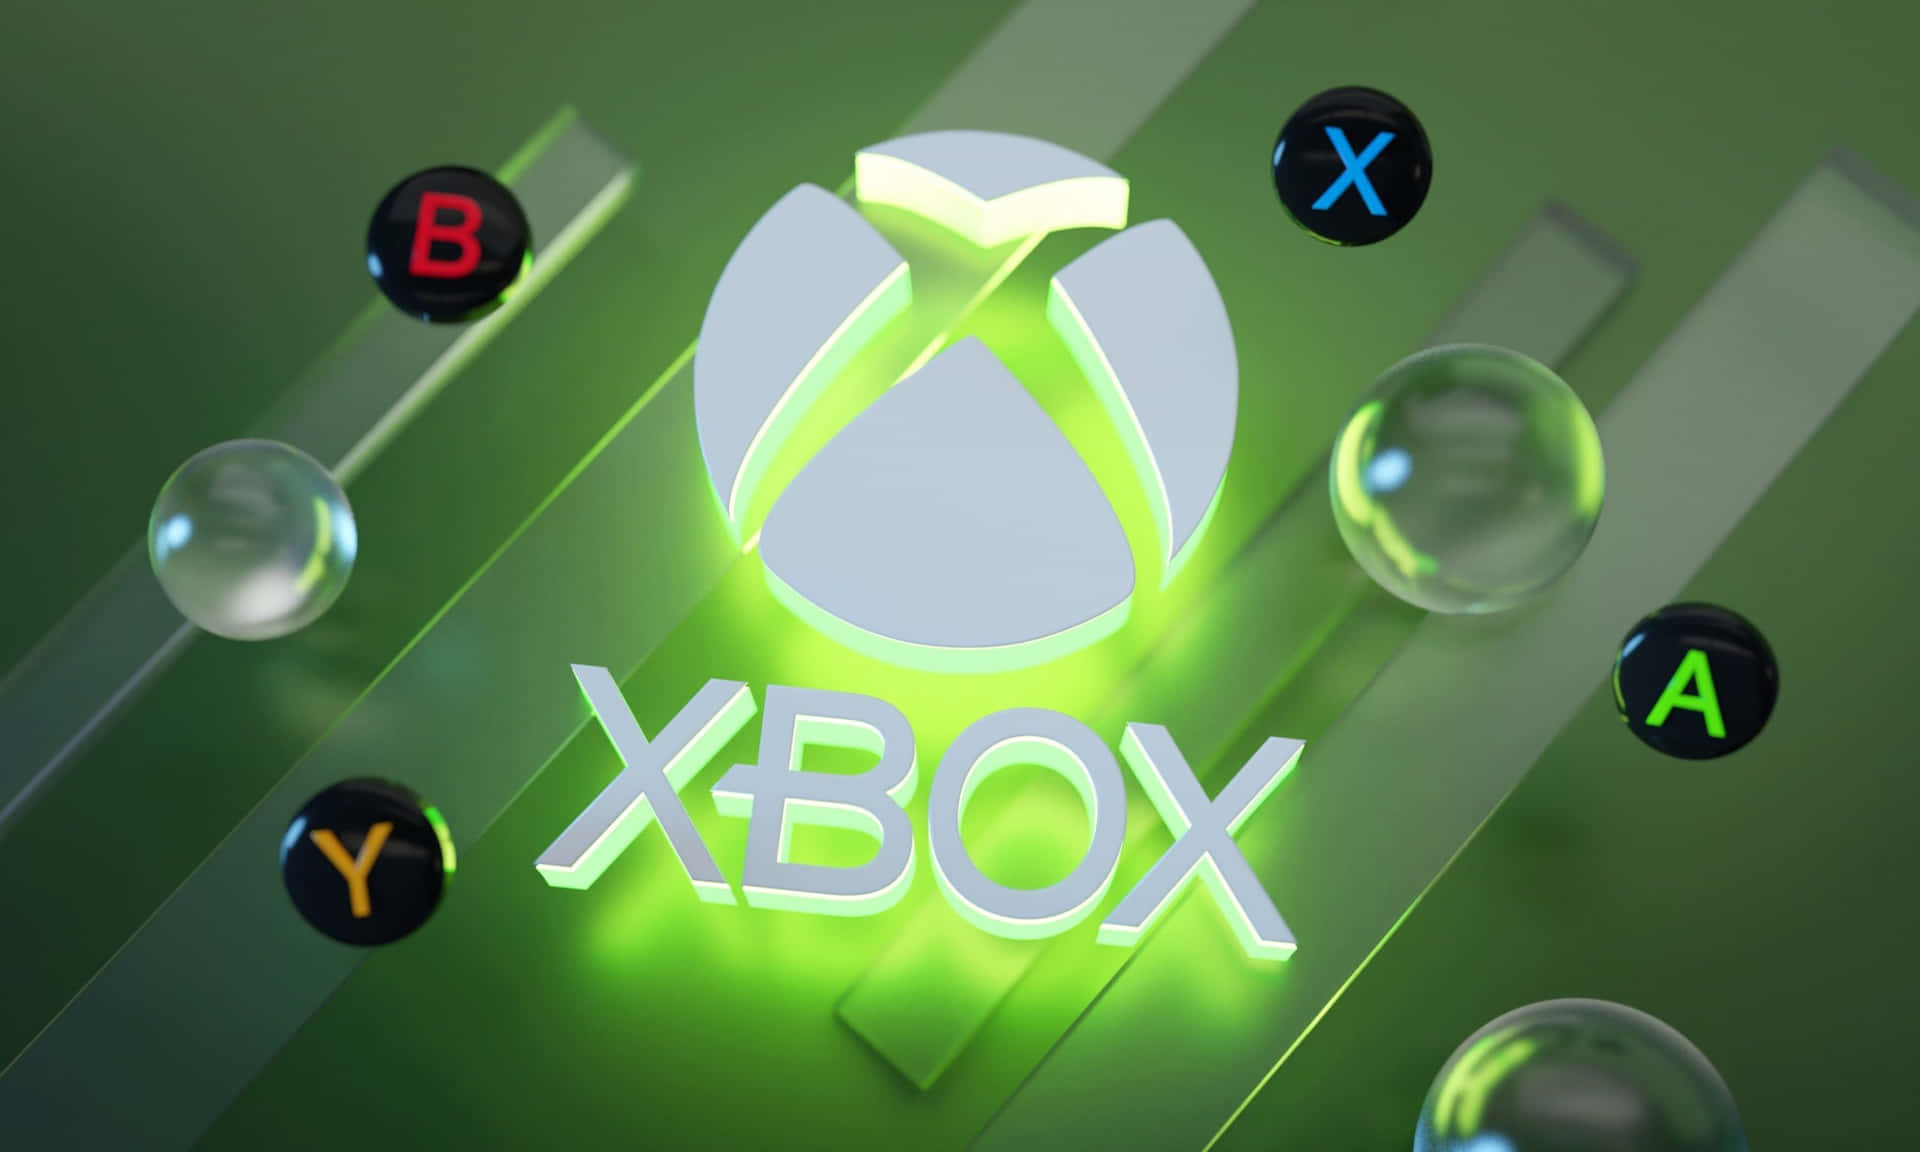 Xbox 360 Logo Wallpaper 69 images